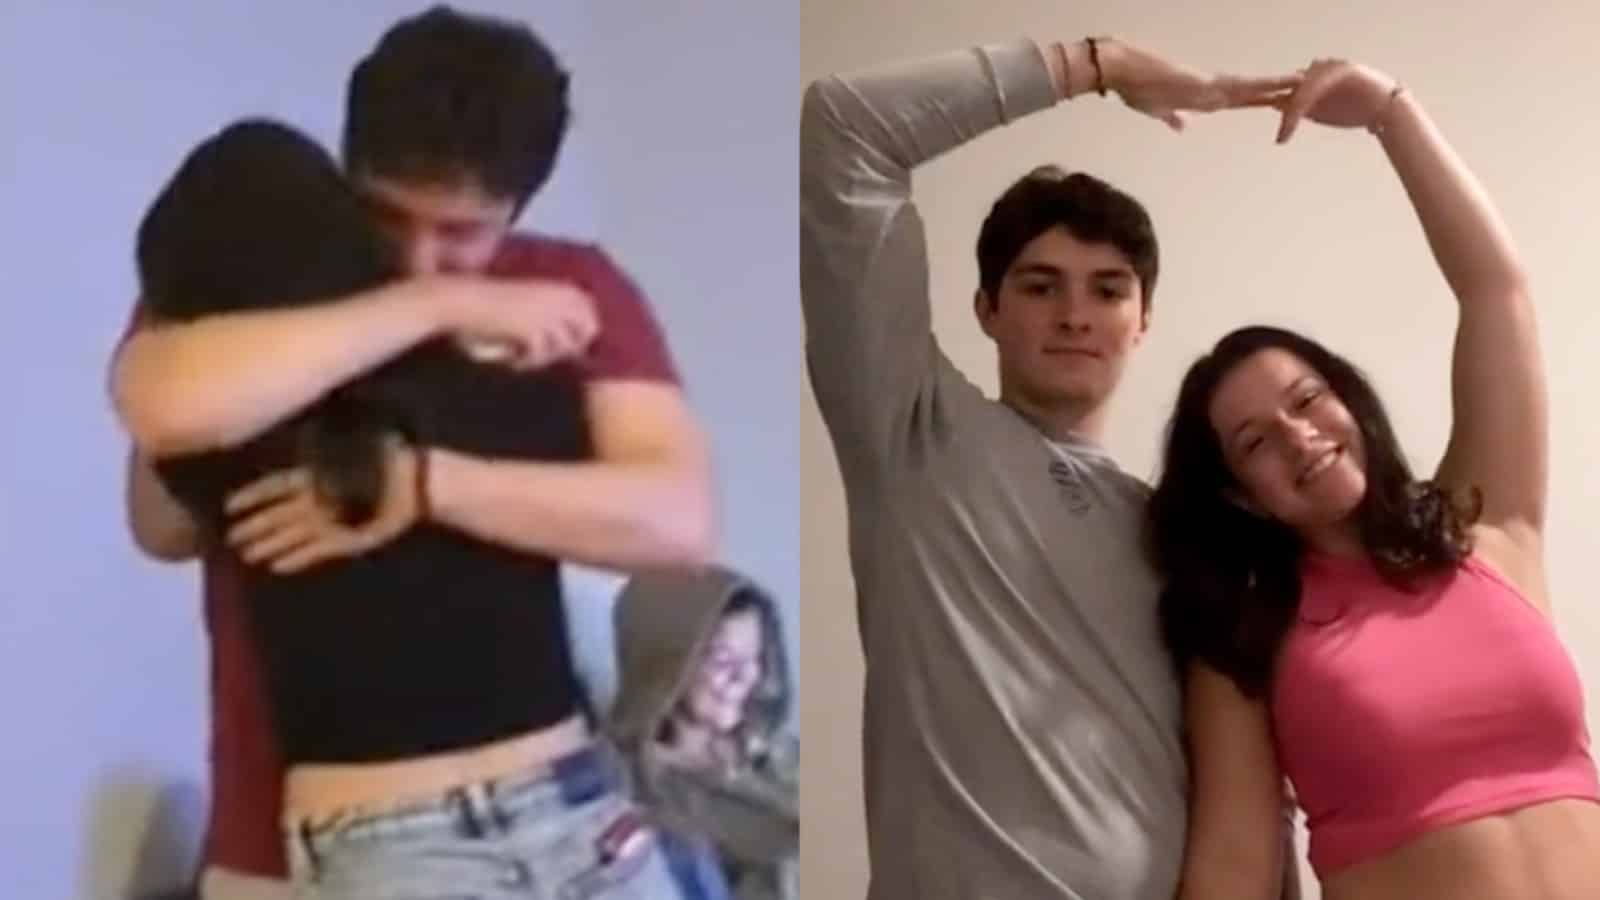 Couch guy hugs his girlfriend in viral TikTok video